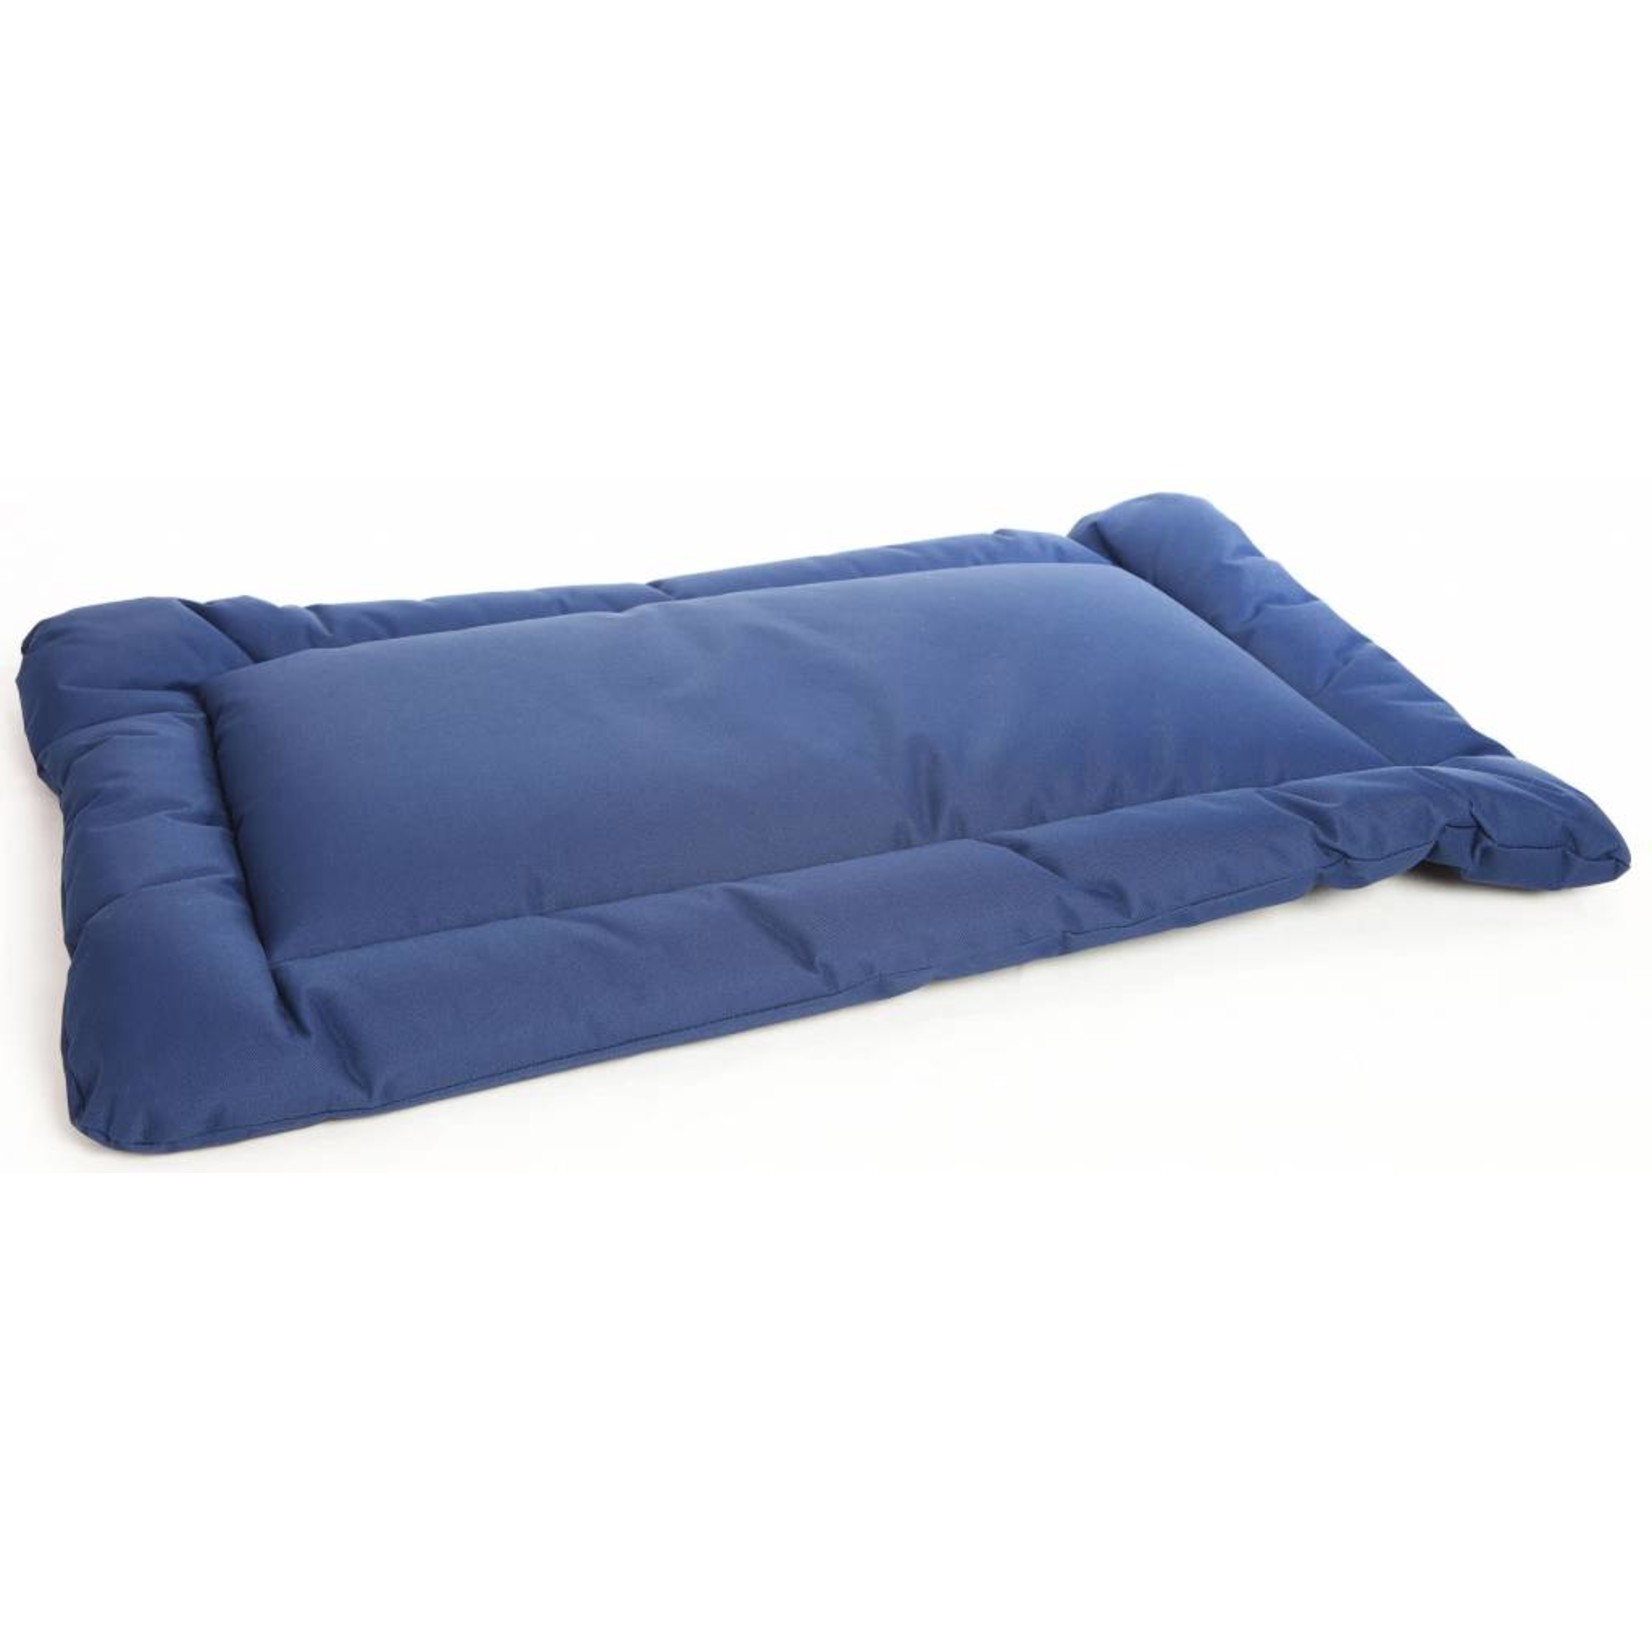 Pets & Leisure Country Dog Heavy Duty Waterproof Rectangular Cushion Pad, Blue